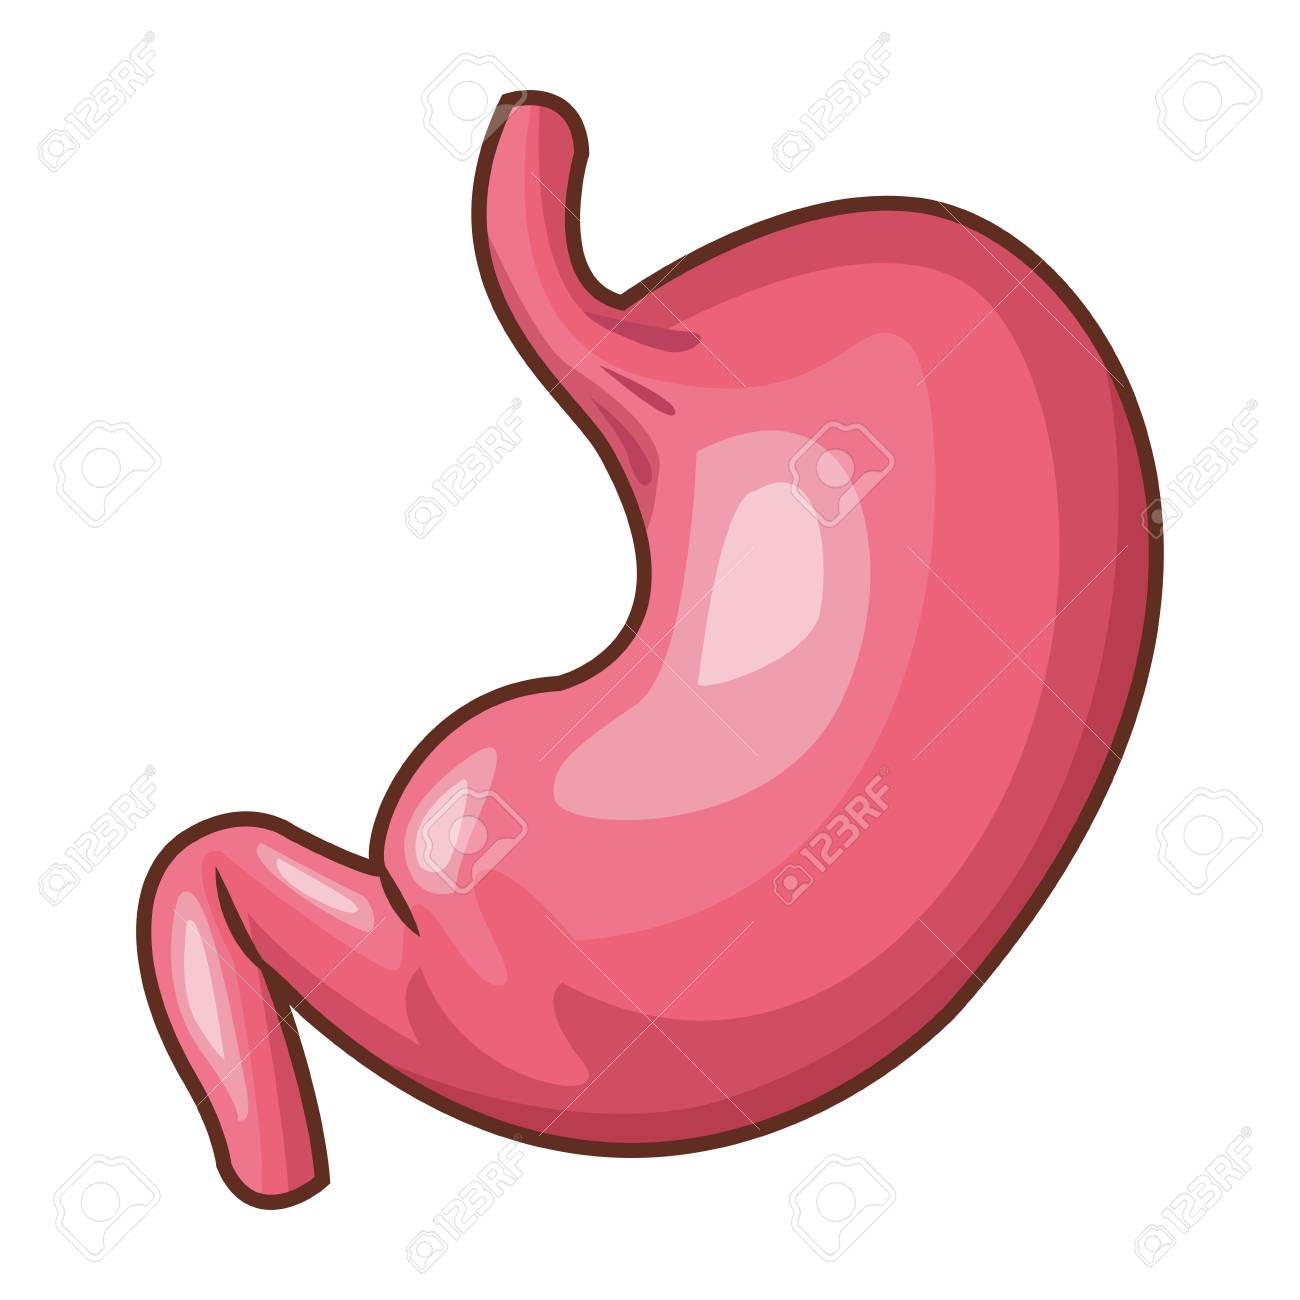 Human stomach organ vector illustration graphic design.